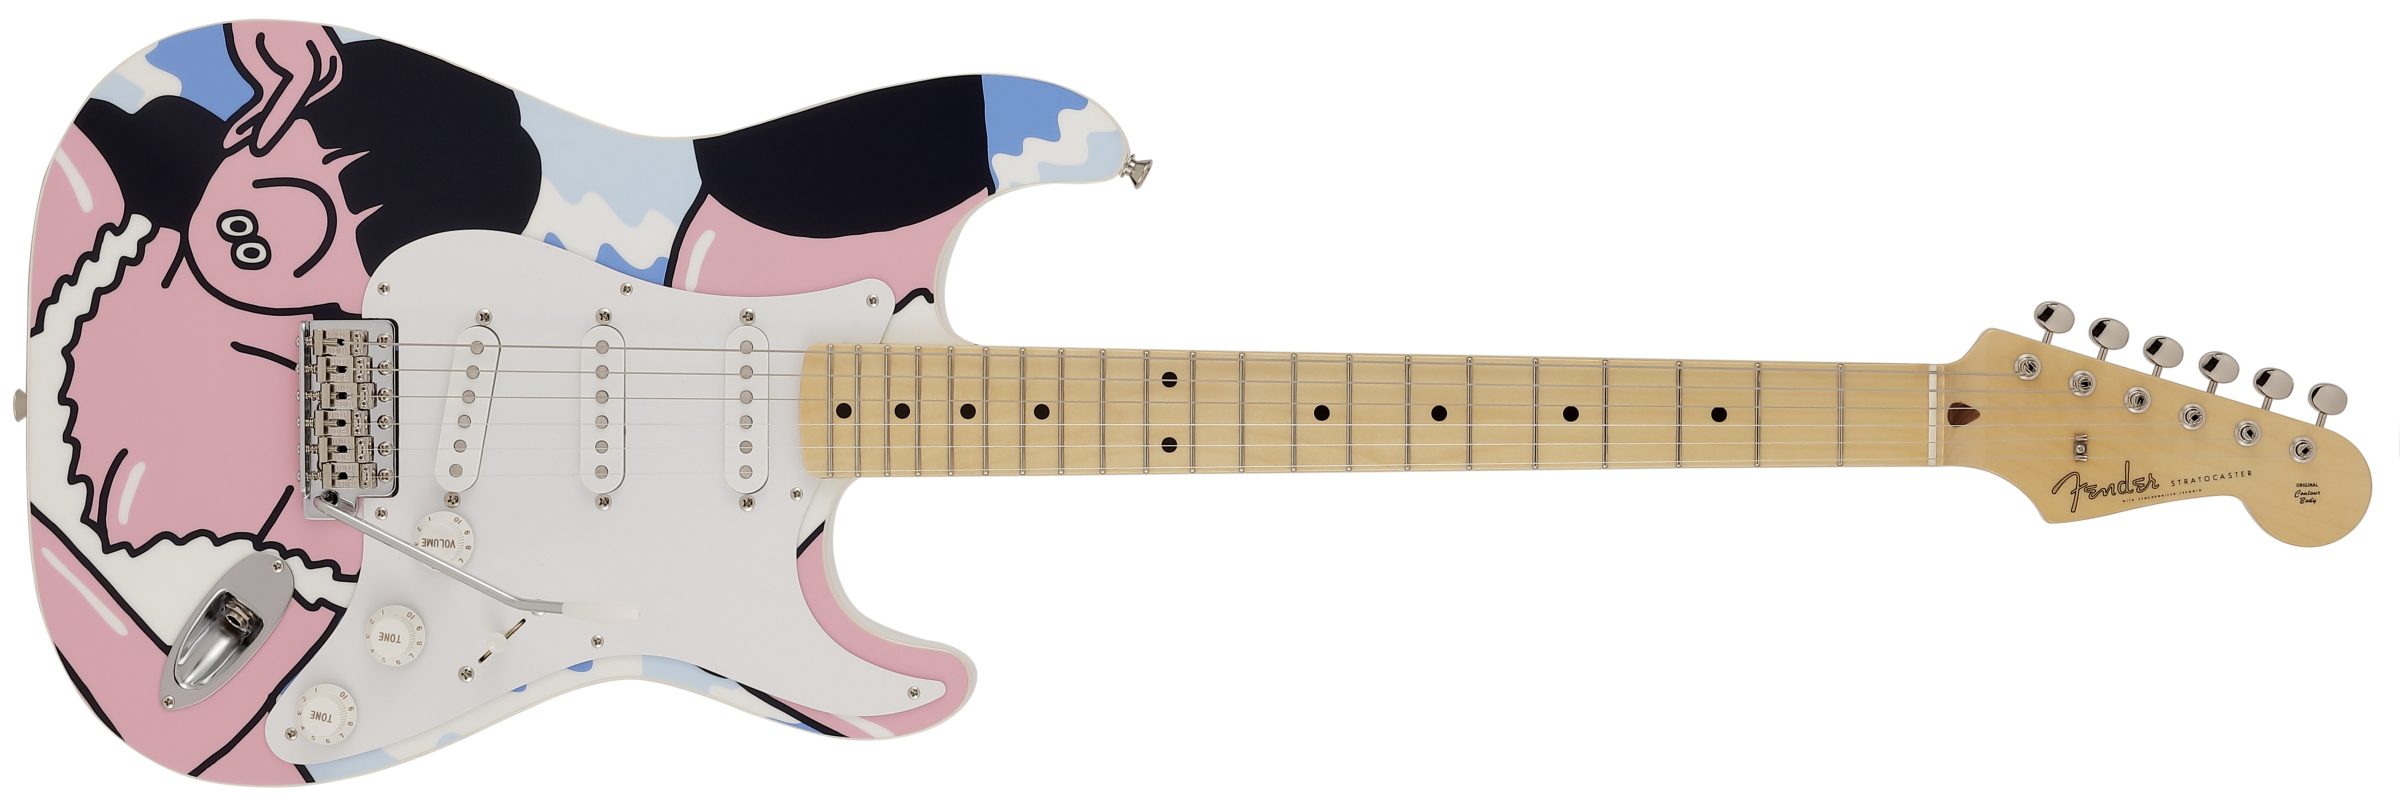 FACE Stratocaster